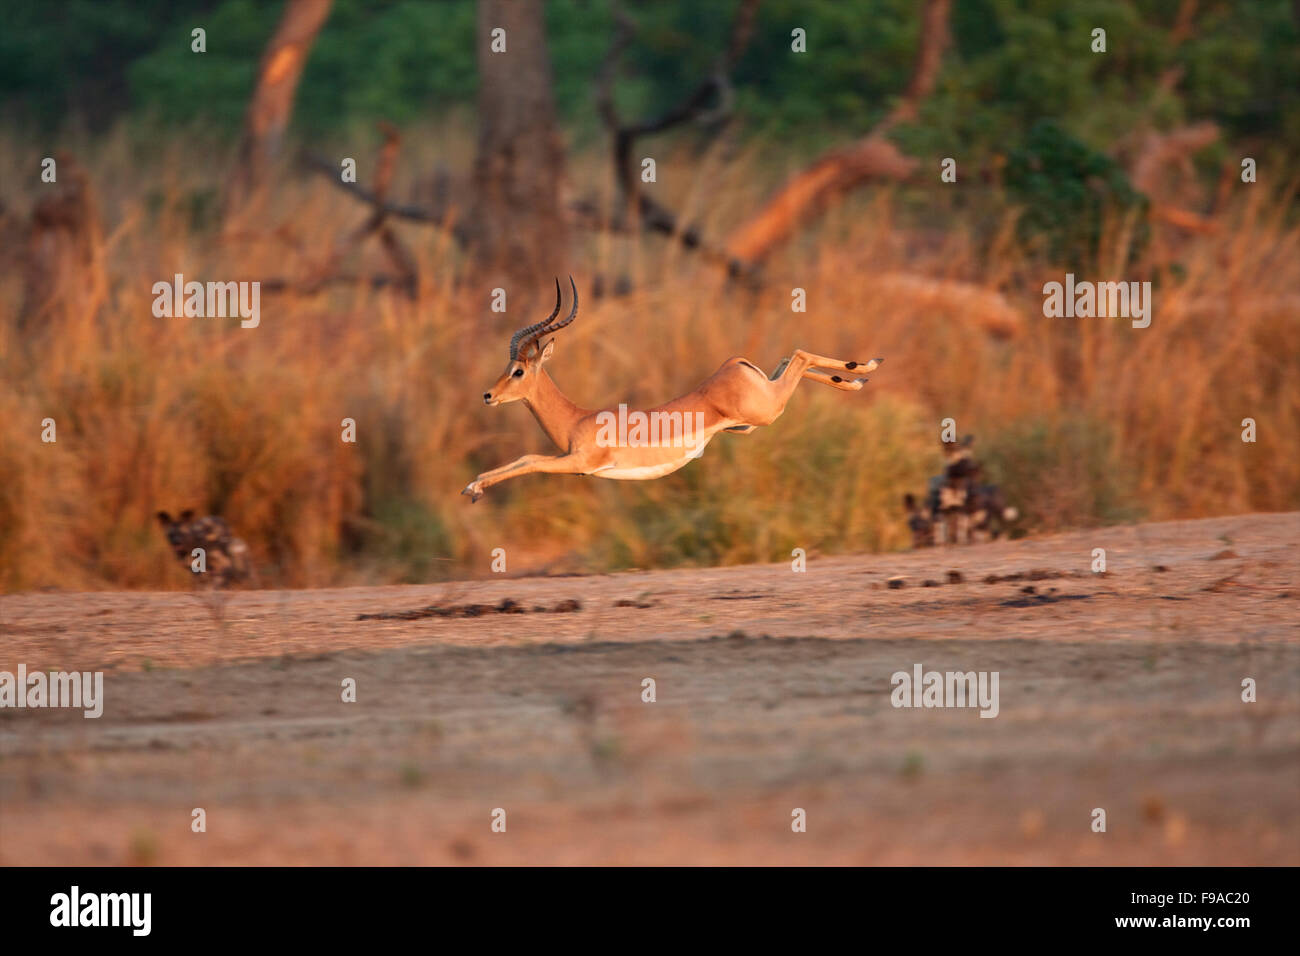 A male springbok running Stock Photo